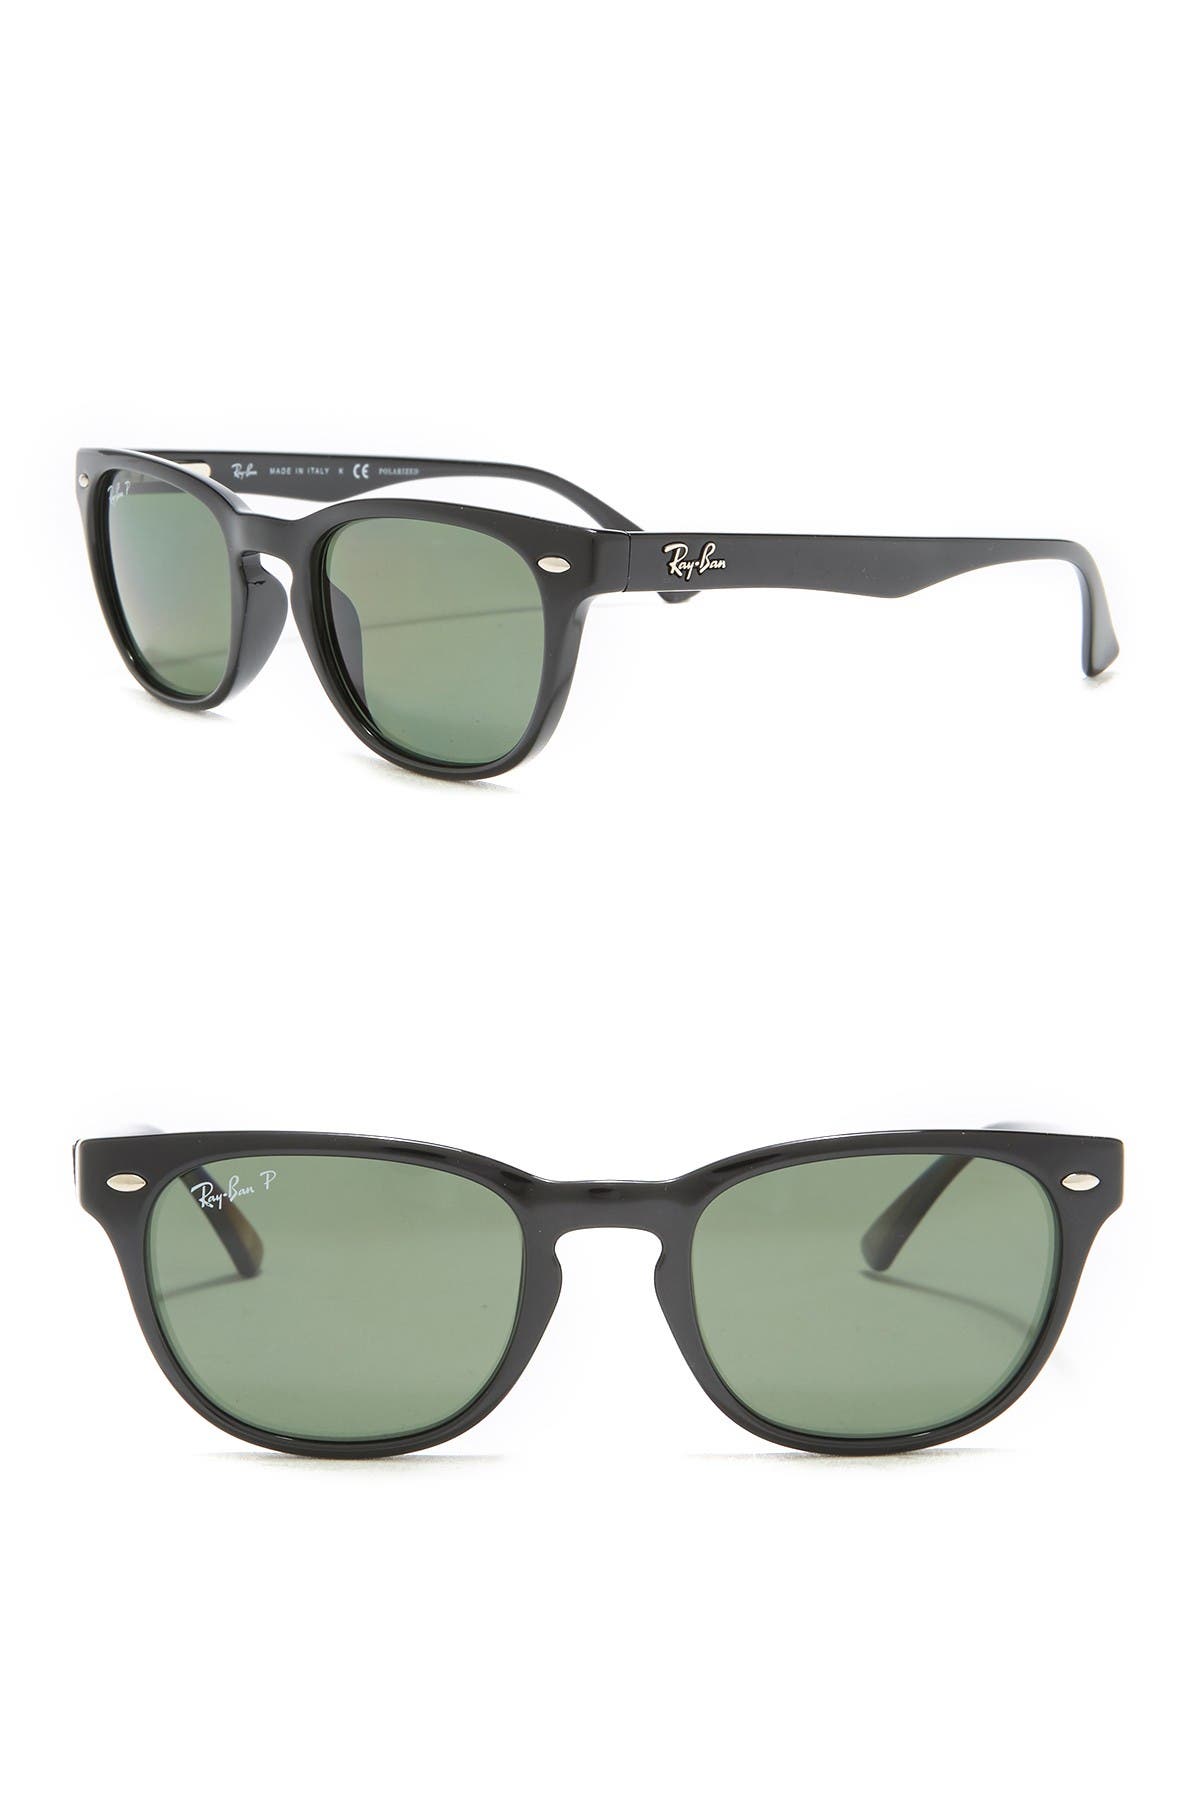 polarized wayfarer style sunglasses